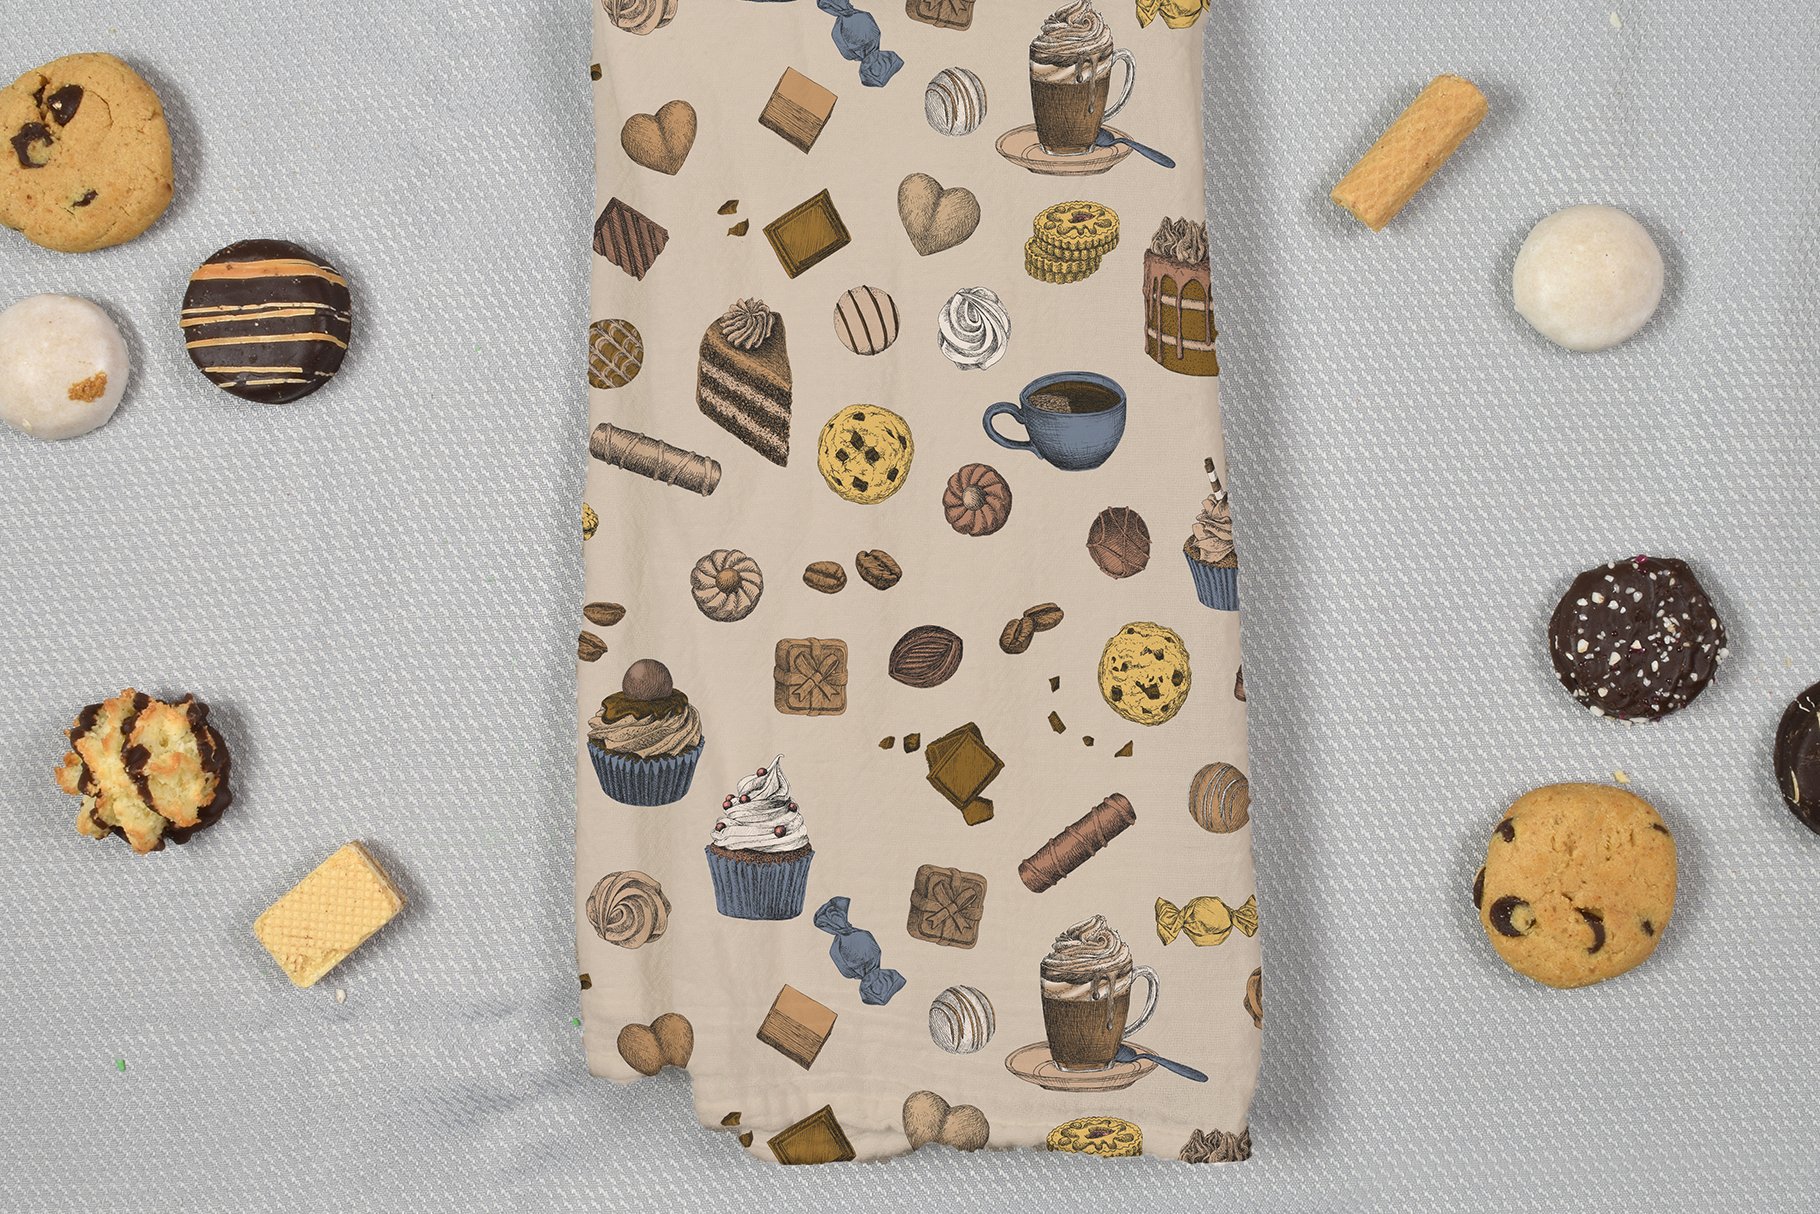 Tasty cupcakes on a fabric.